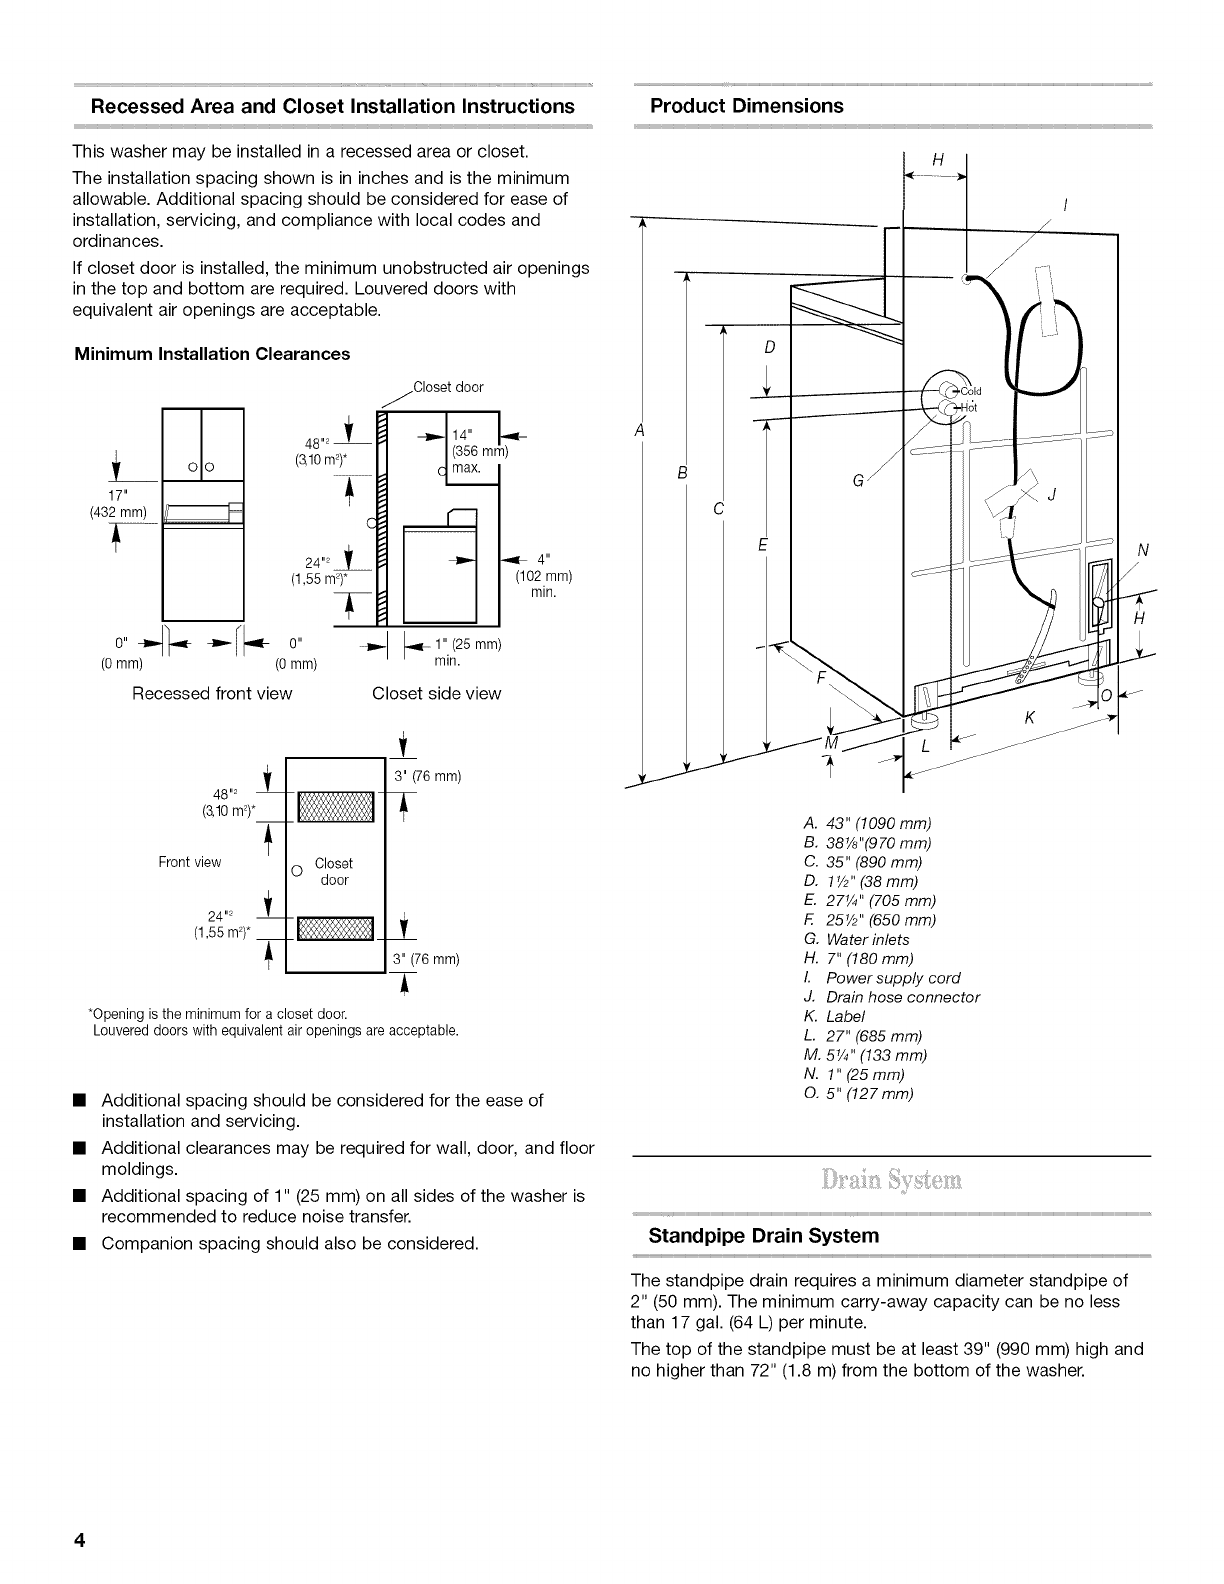 Fisher Paykel Washer Wiring Diagram